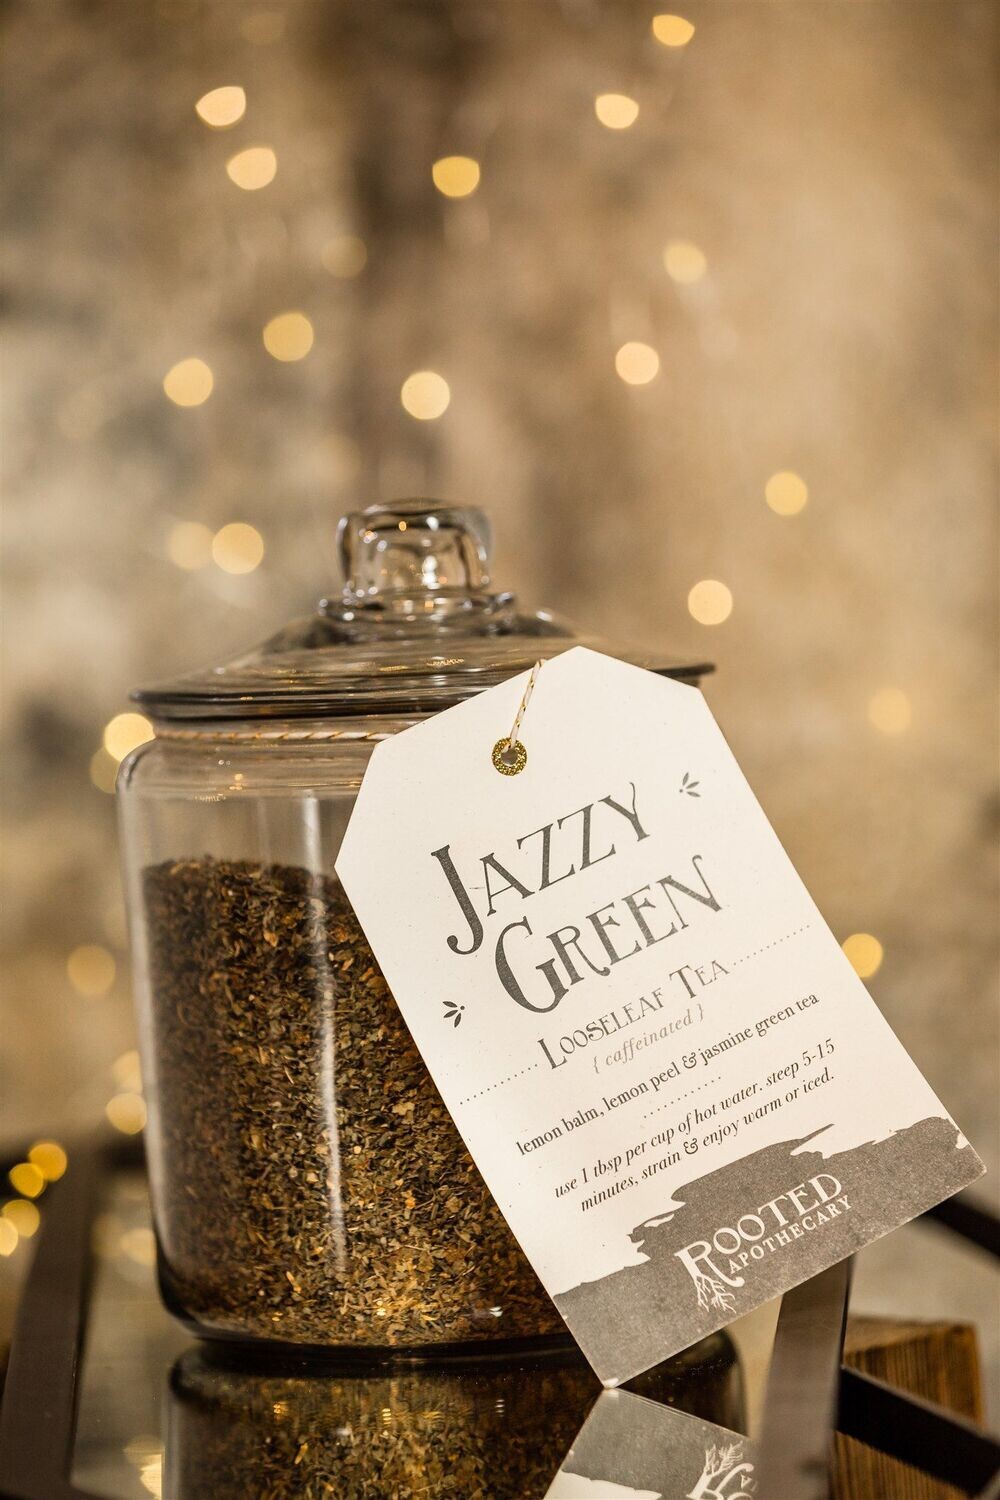 Jazzy Green Tea, Size: 1 oz